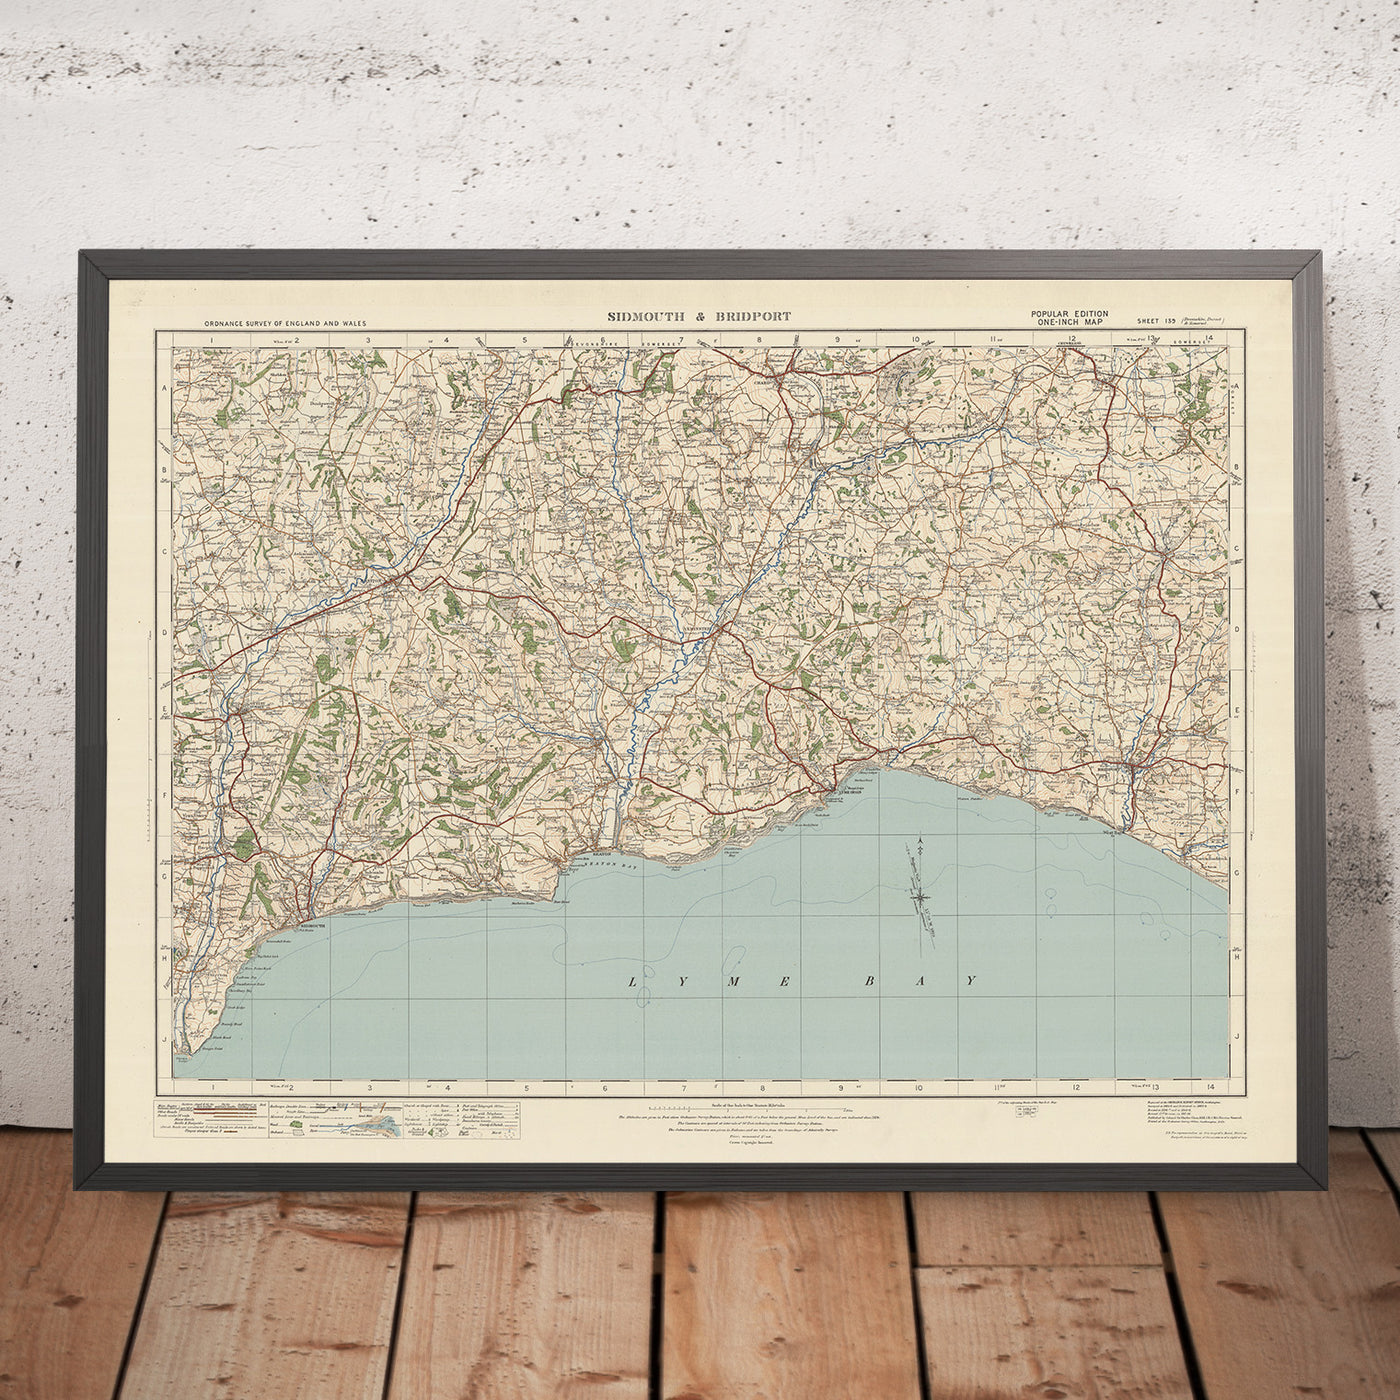 Old Ordnance Survey Map, Sheet 139 - Sidmouth & Bridport, 1925: Seaton, Honiton, Lyme Regis, Axminster, East Devon AONB